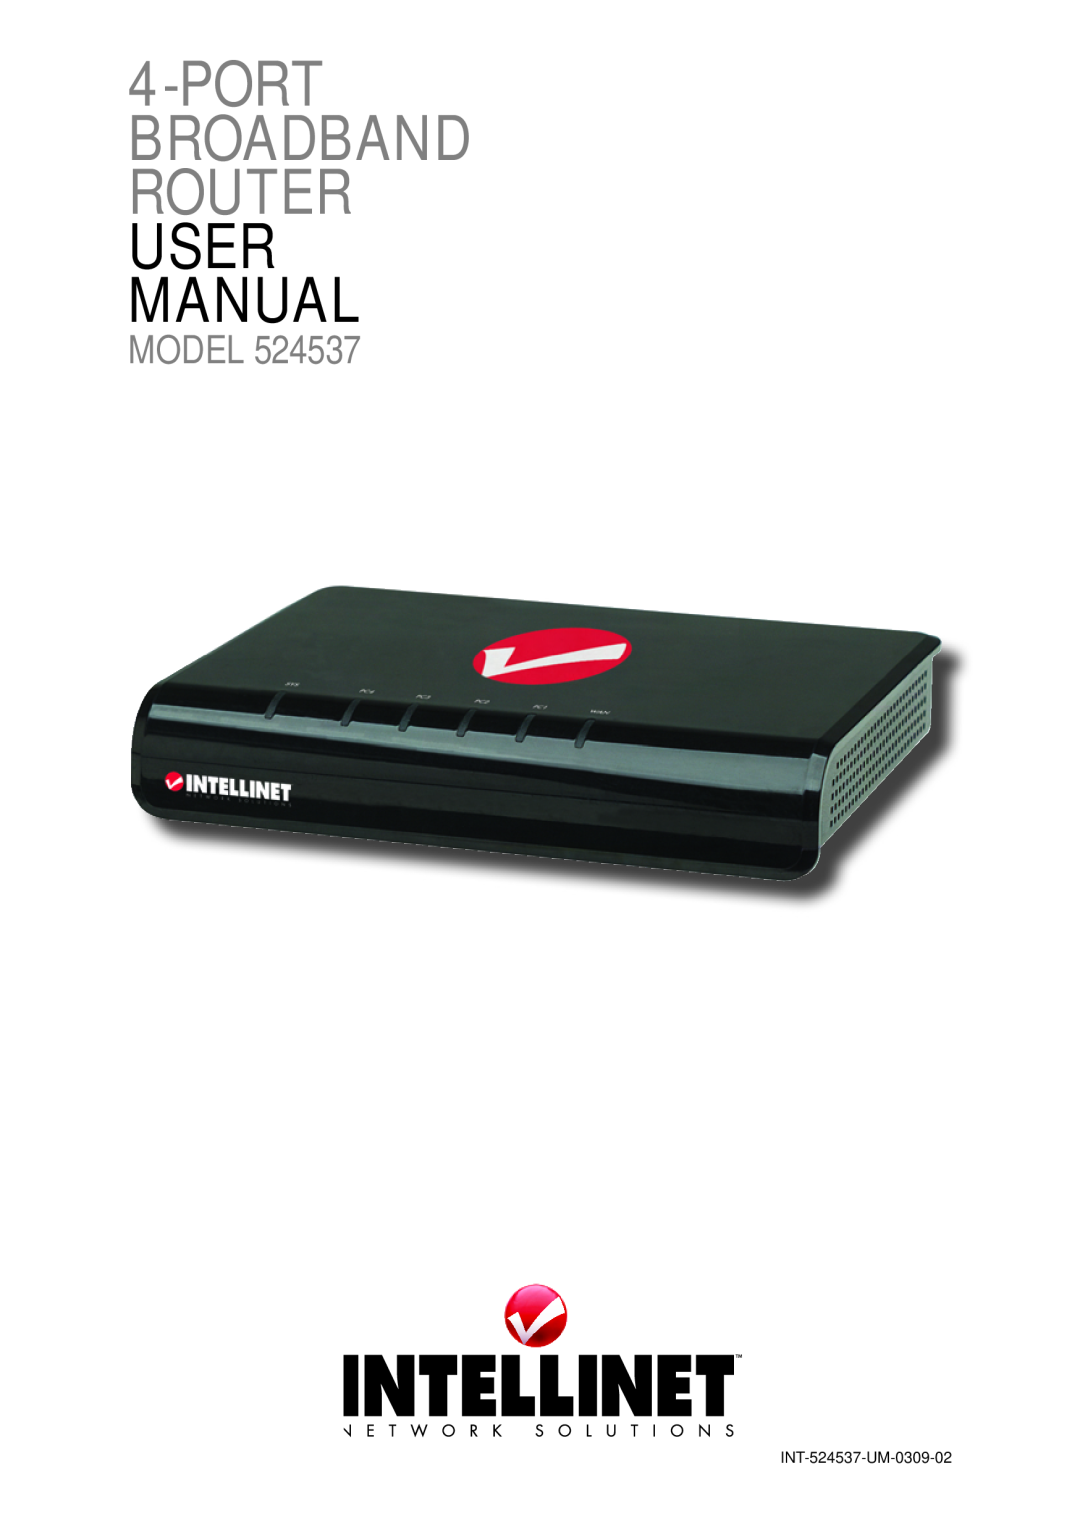 Intellinet Network Solutions 524537 user manual Port Broadband Router user manual, Model 